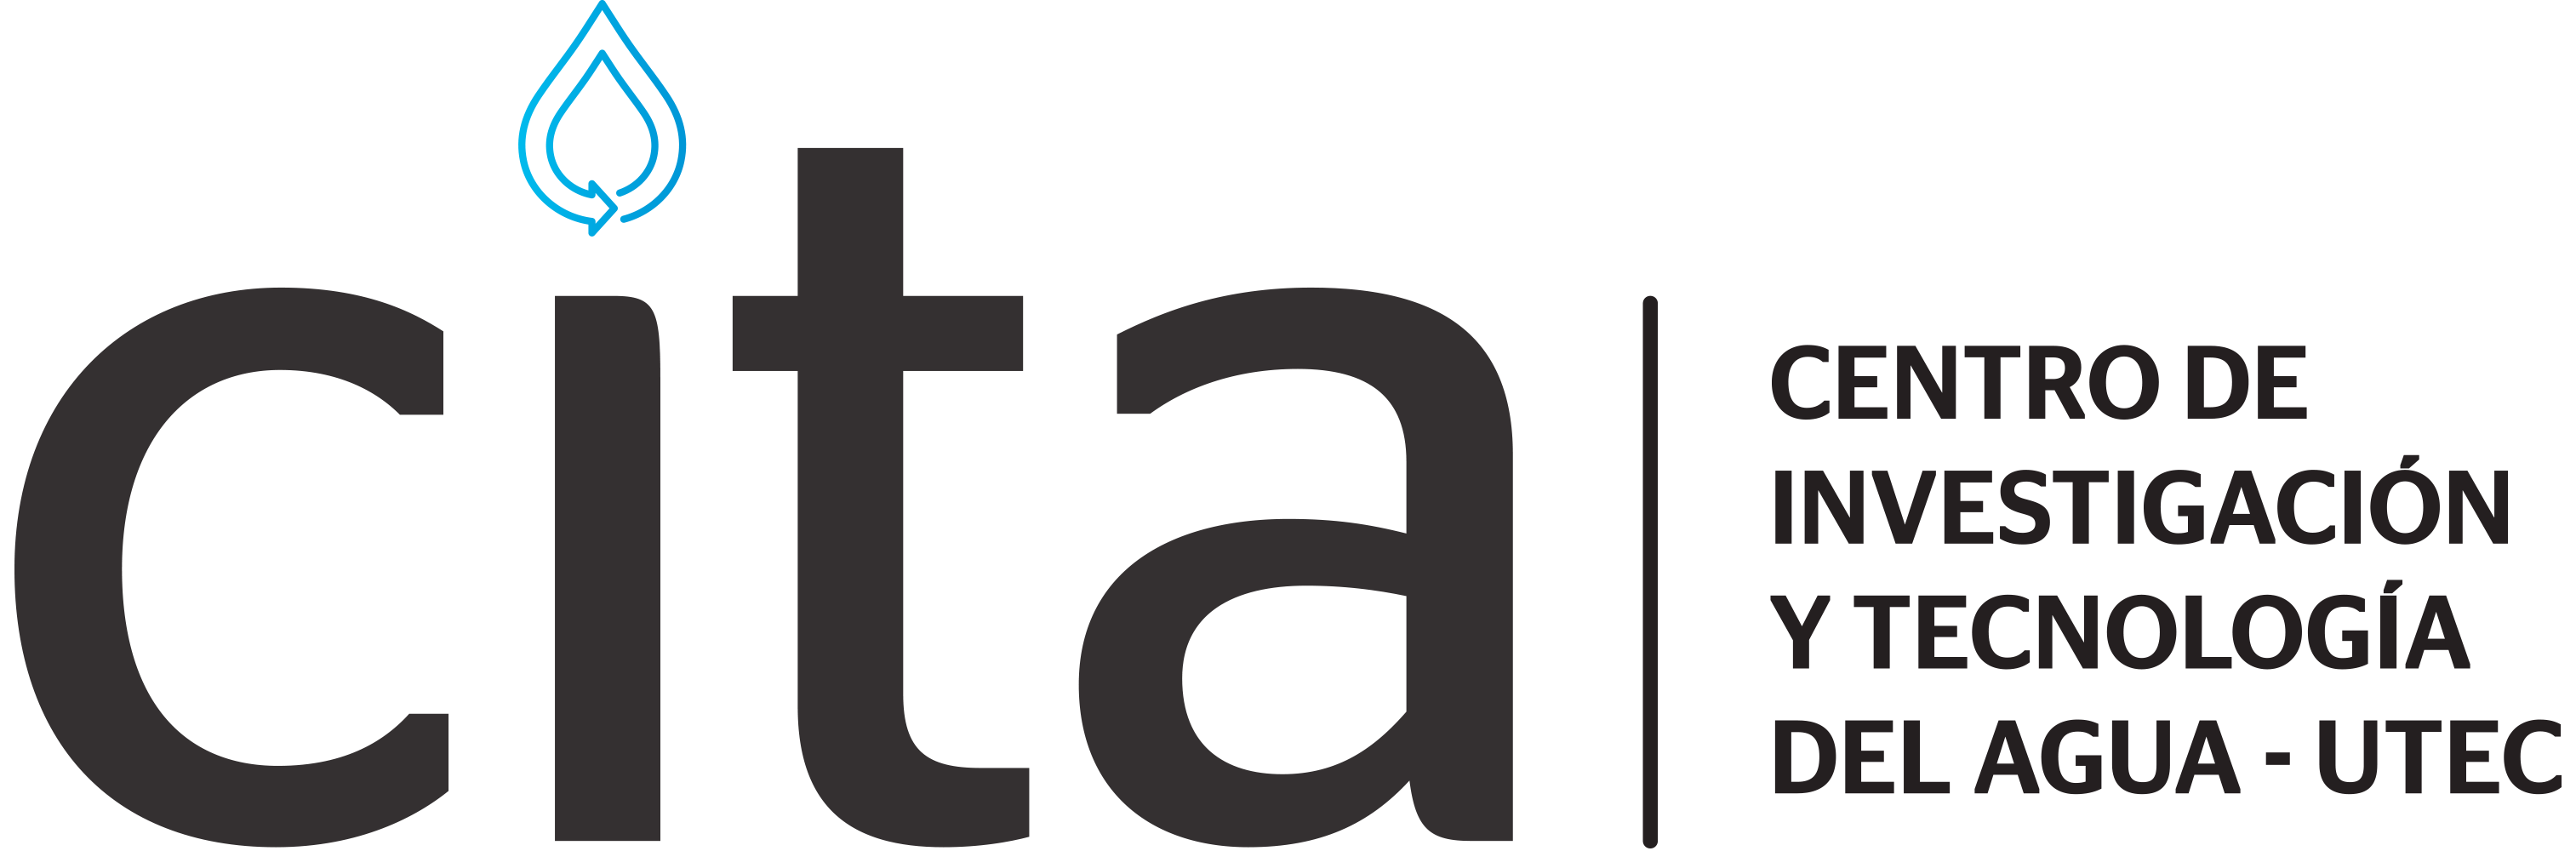 logo CITA